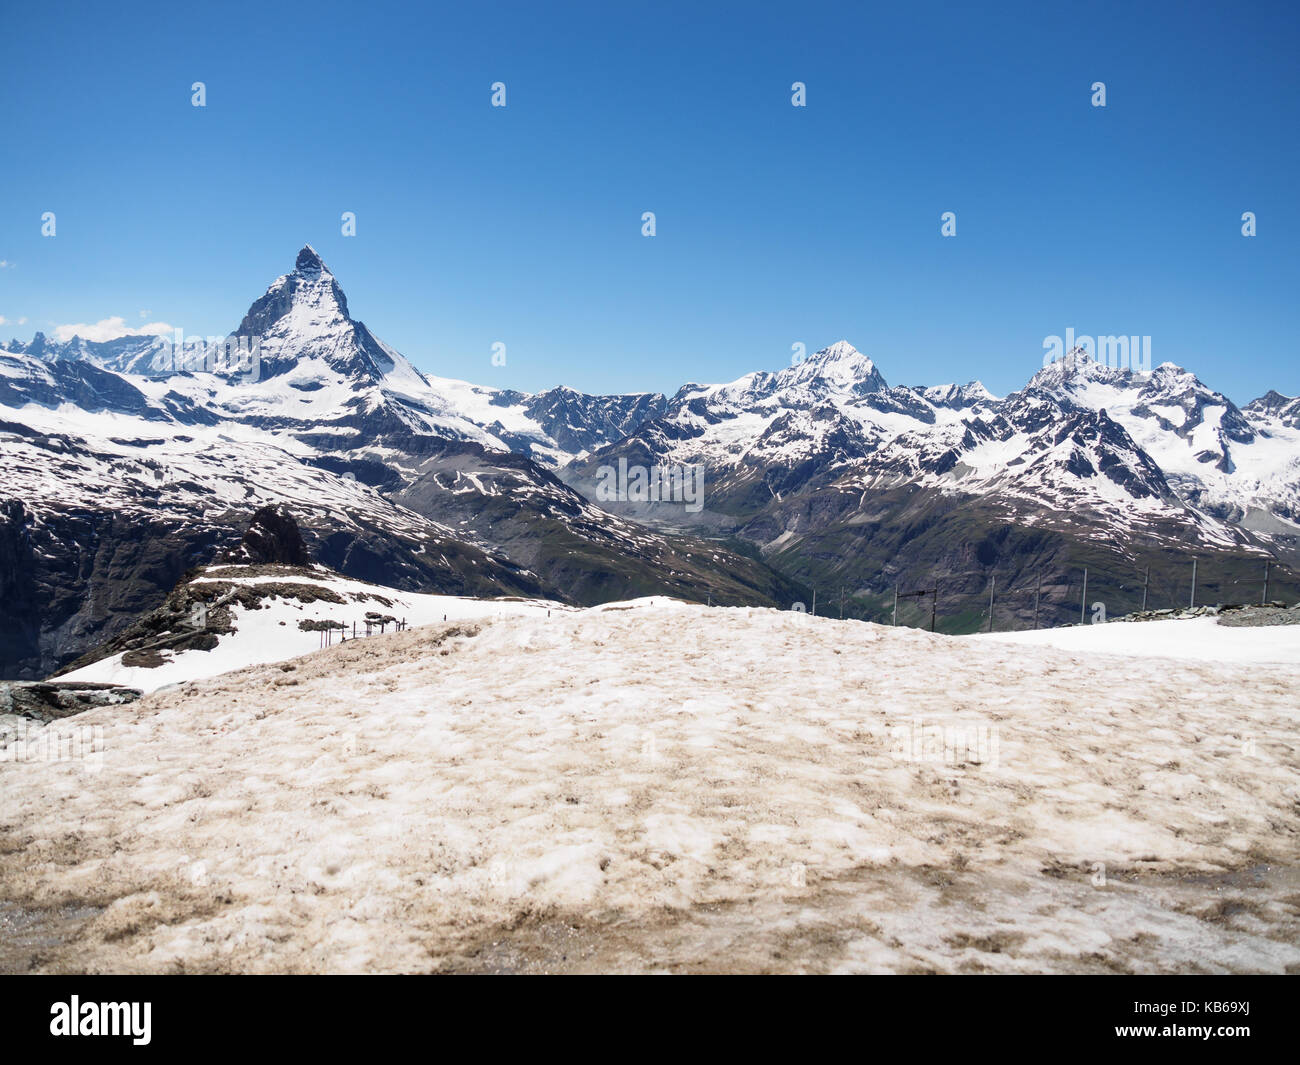 Matterhorn peak in sunny day view from gornergrat train station, Zermatt, Switzerland. Stock Photo